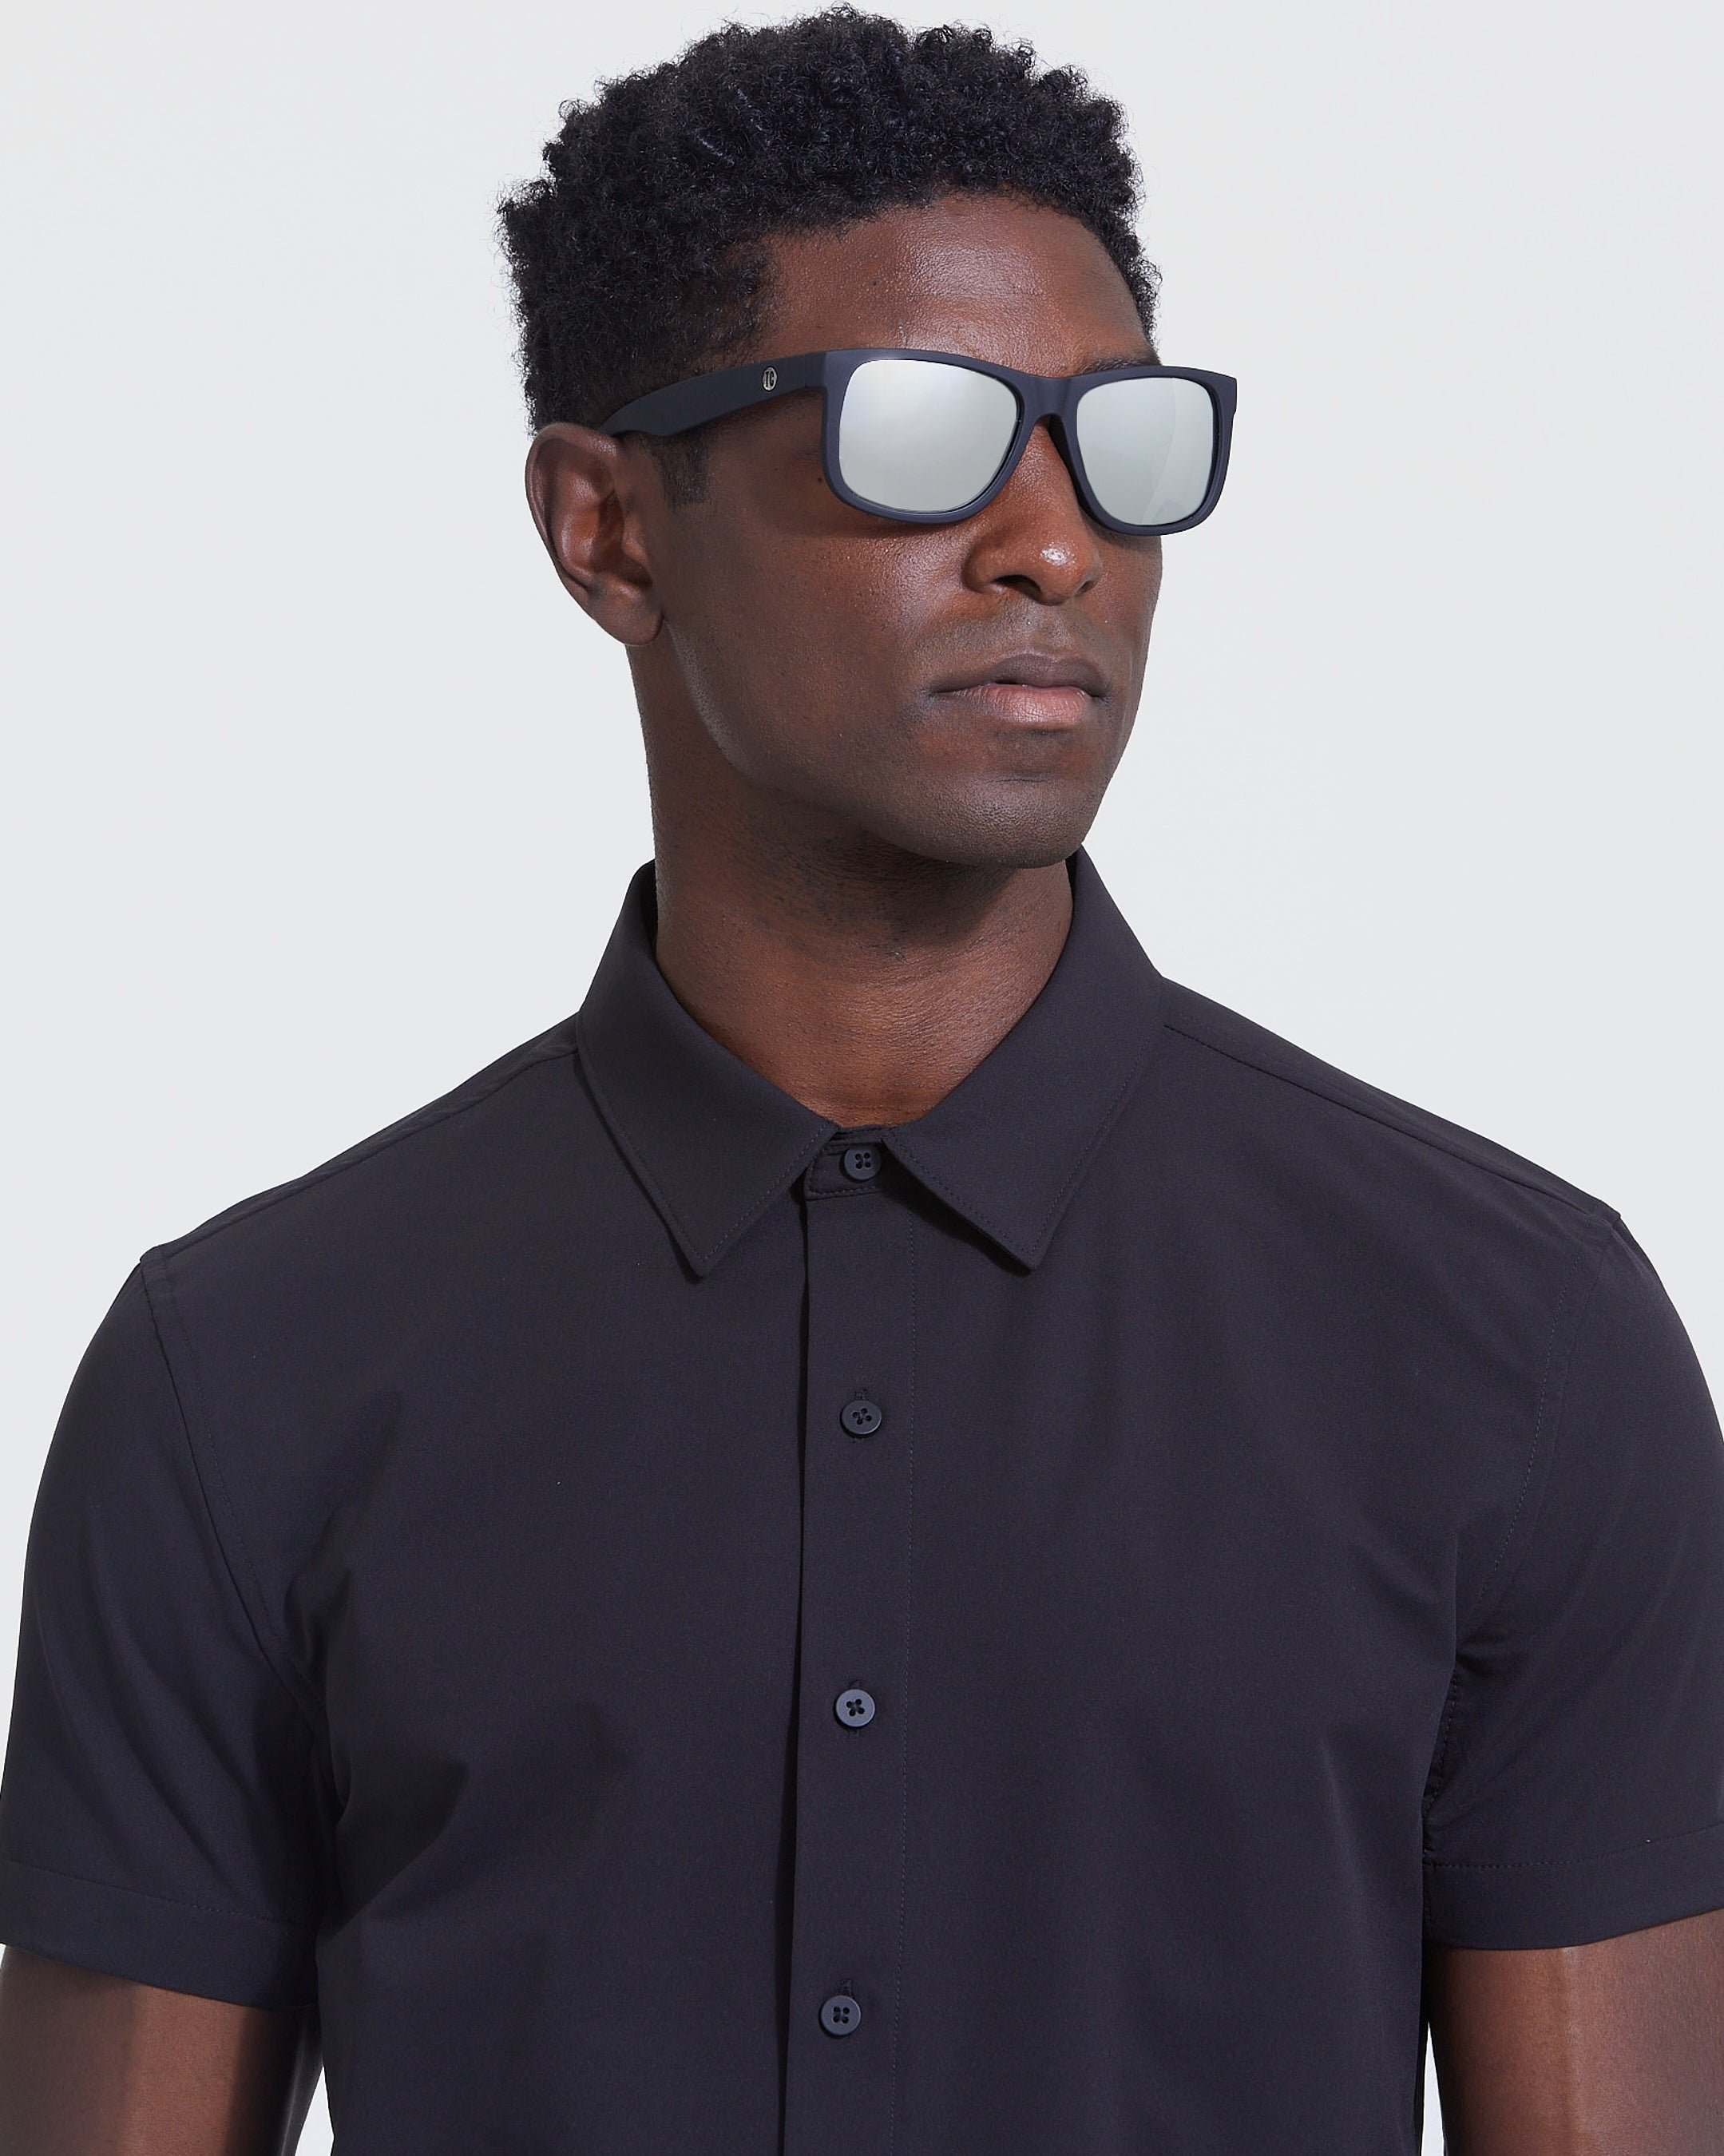 Black Mirror Classic Polarized Sunglasses